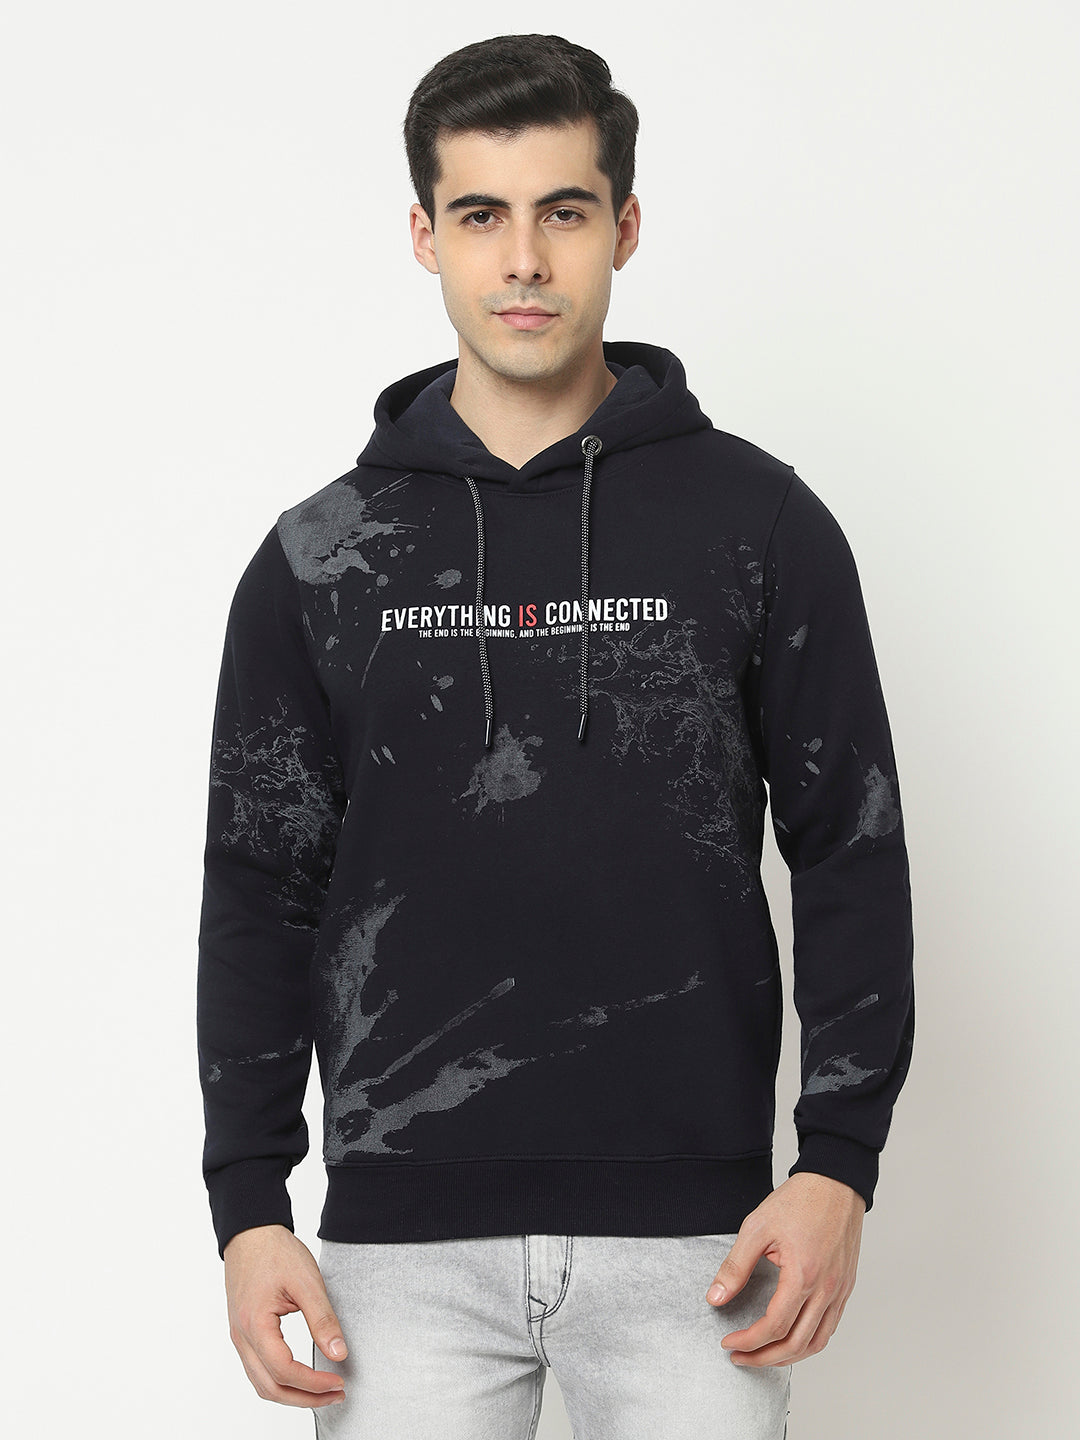  Black Sweatshirt with Graphic Print 